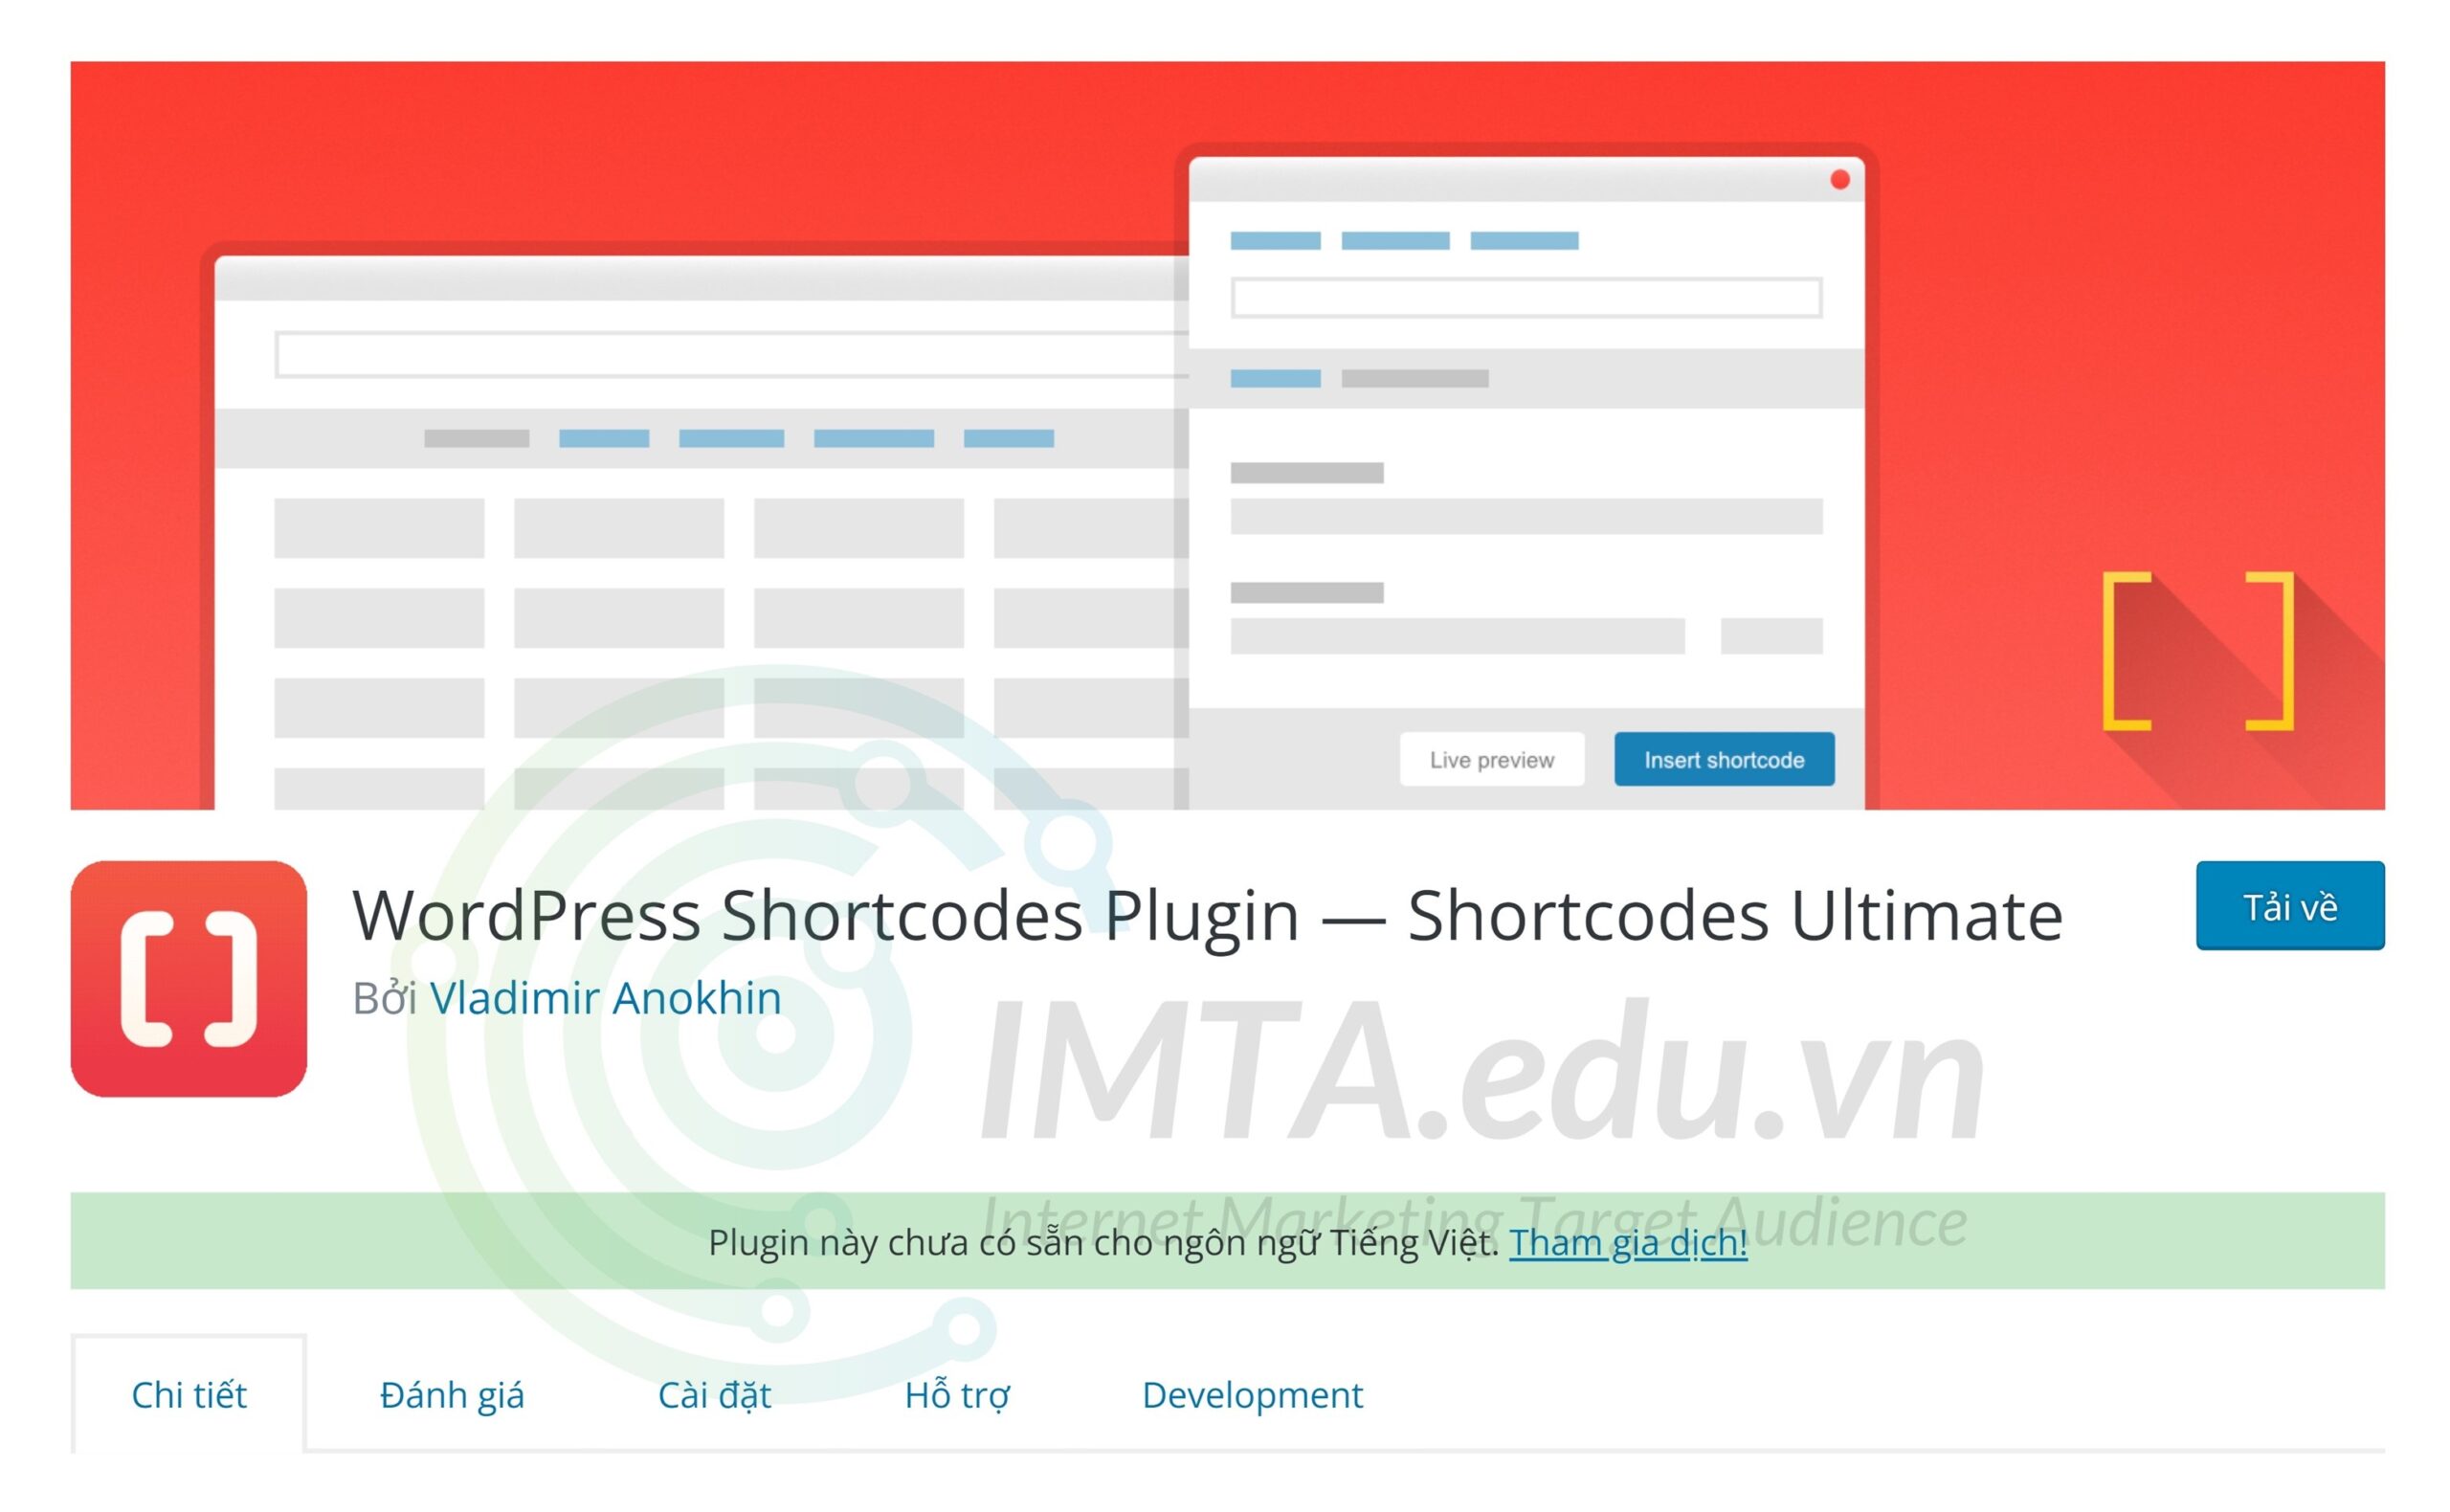 Plugin Shortcodes Ultimate trên kho WordPress.org